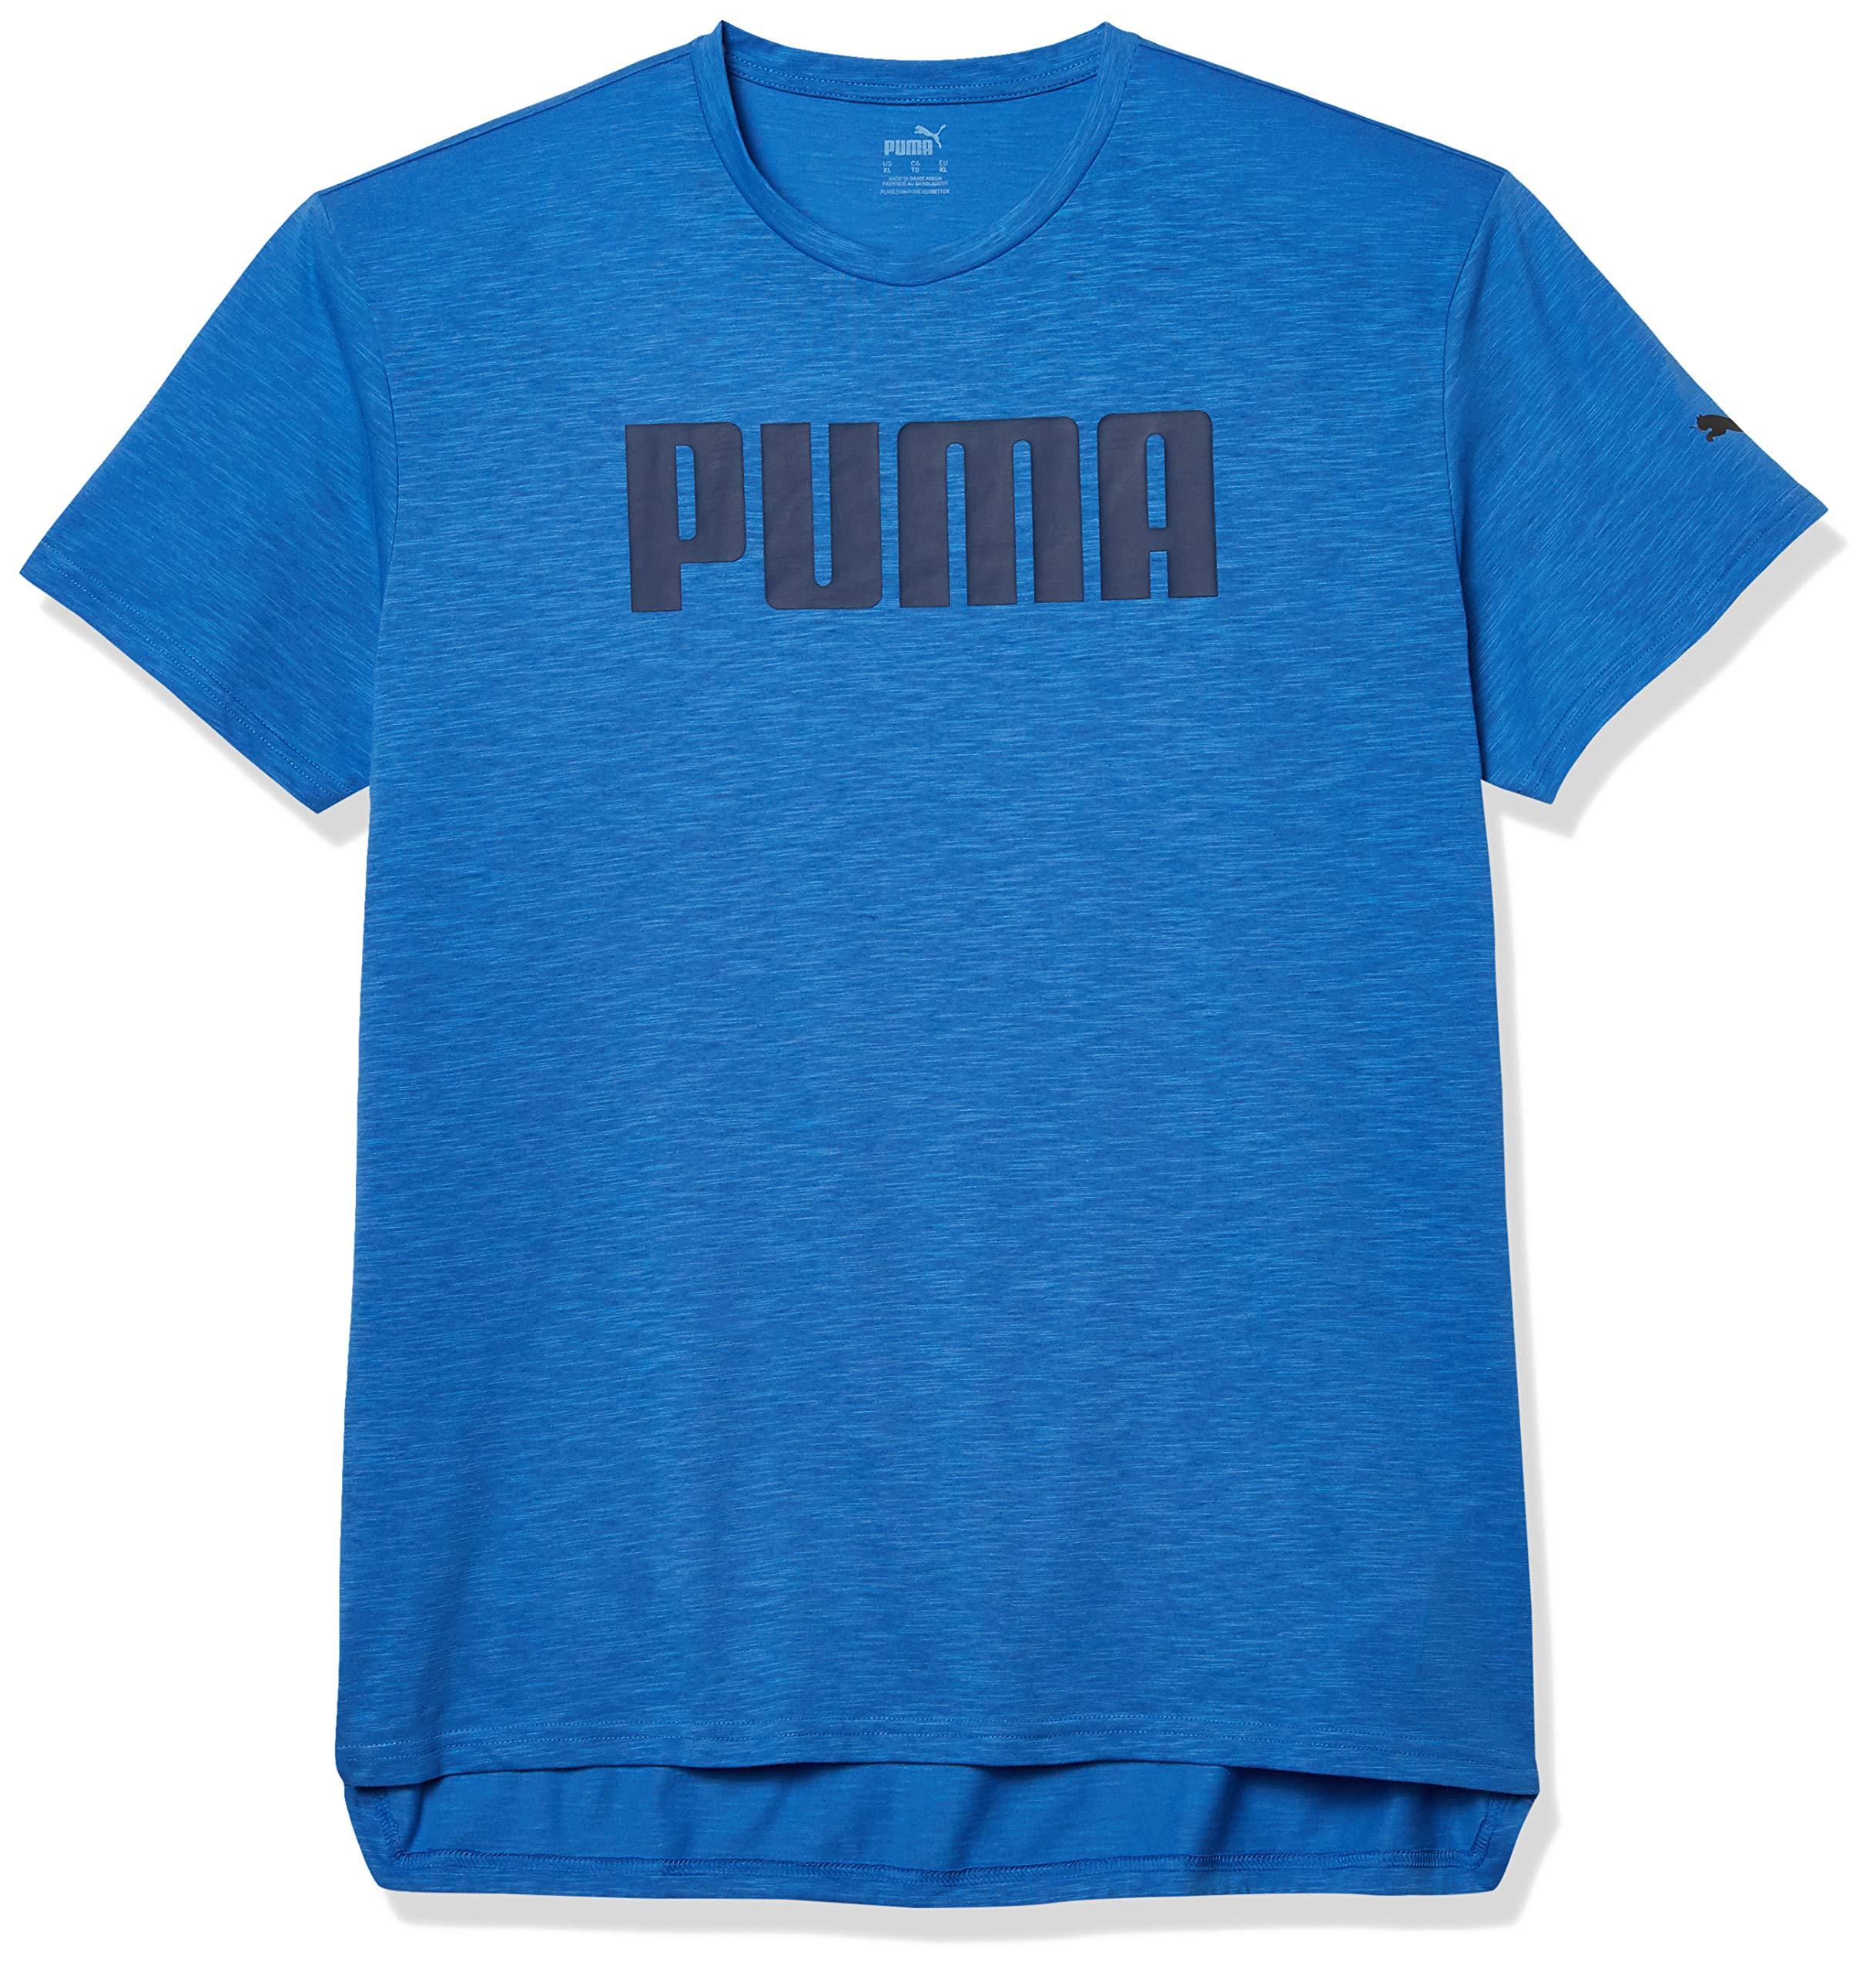 PUMA T-shirt in Blue for Men - Lyst